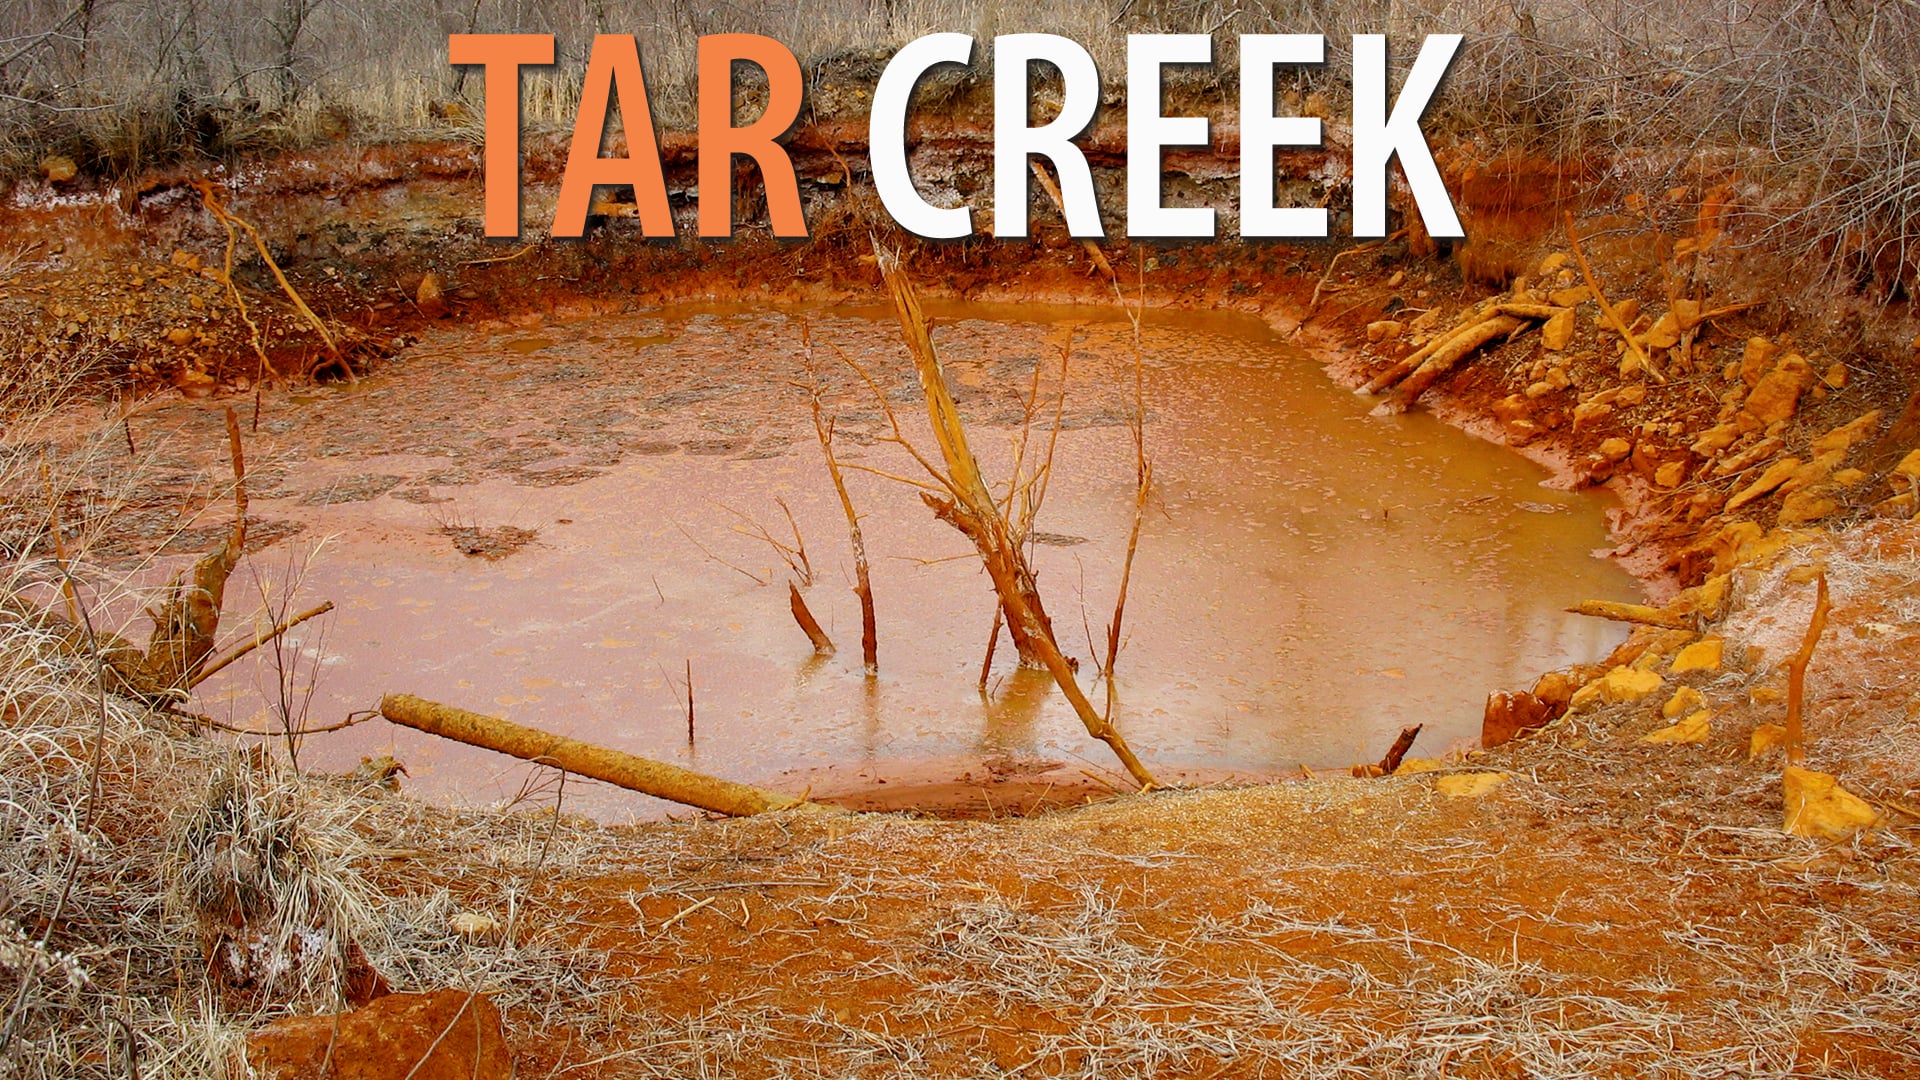 Watch Tar Creek Online Vimeo On Demand on Vimeo